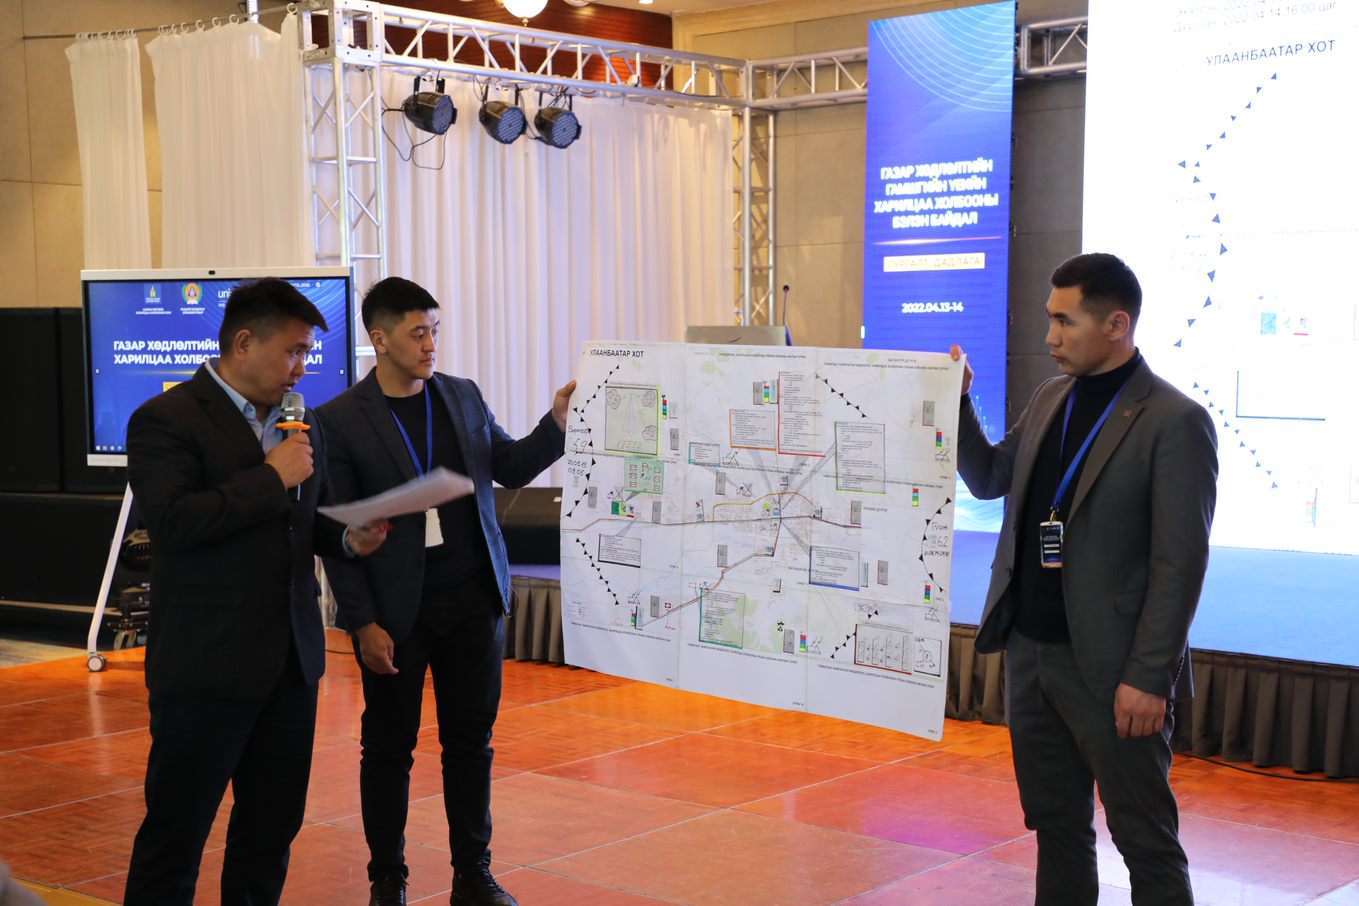 Mongolia preparedness event